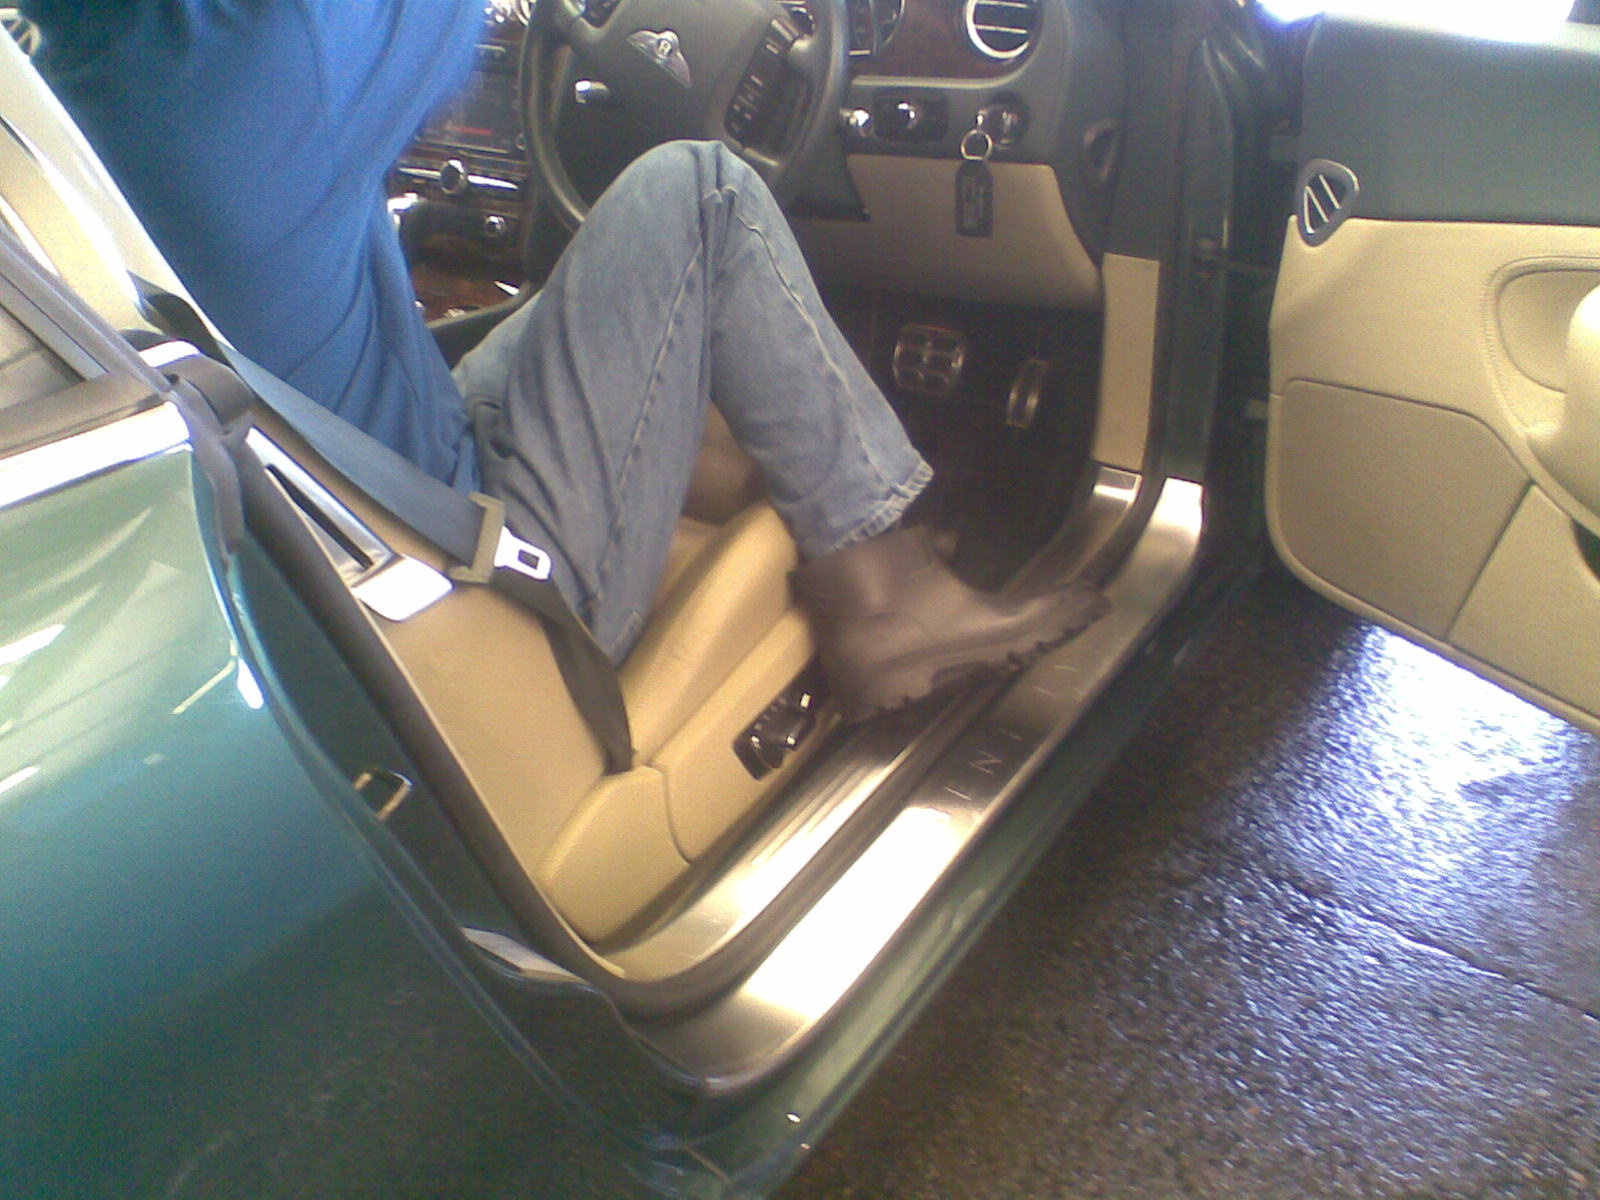 Bentley Continental GT a hozzaillo DUNLOP SPORT gumicsizmaval:)